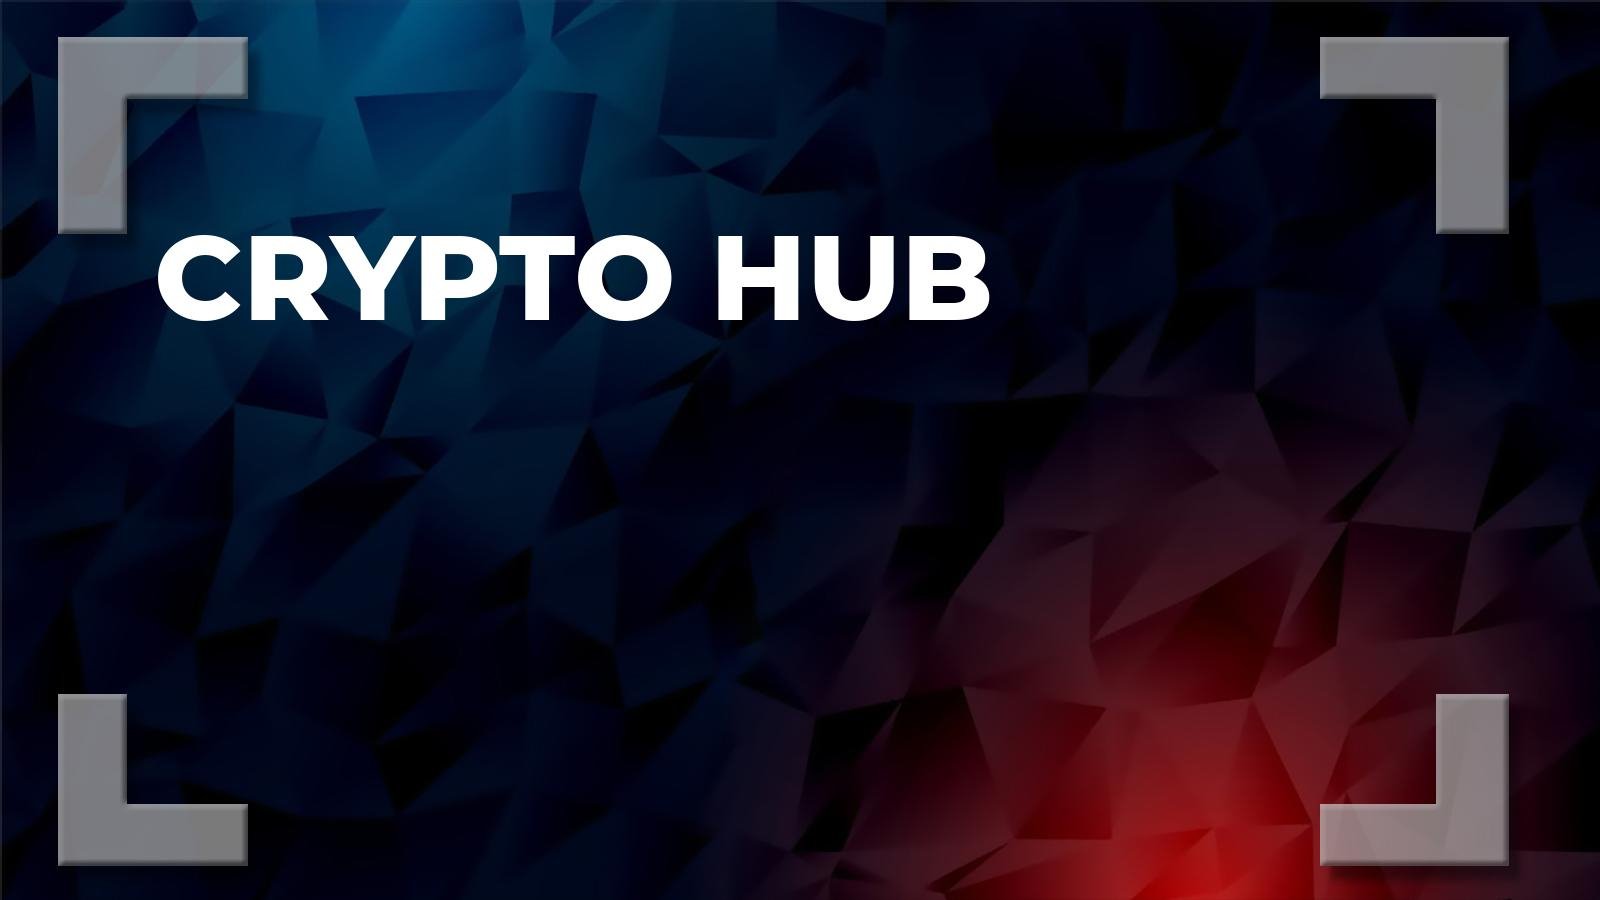 crypto hub meaning